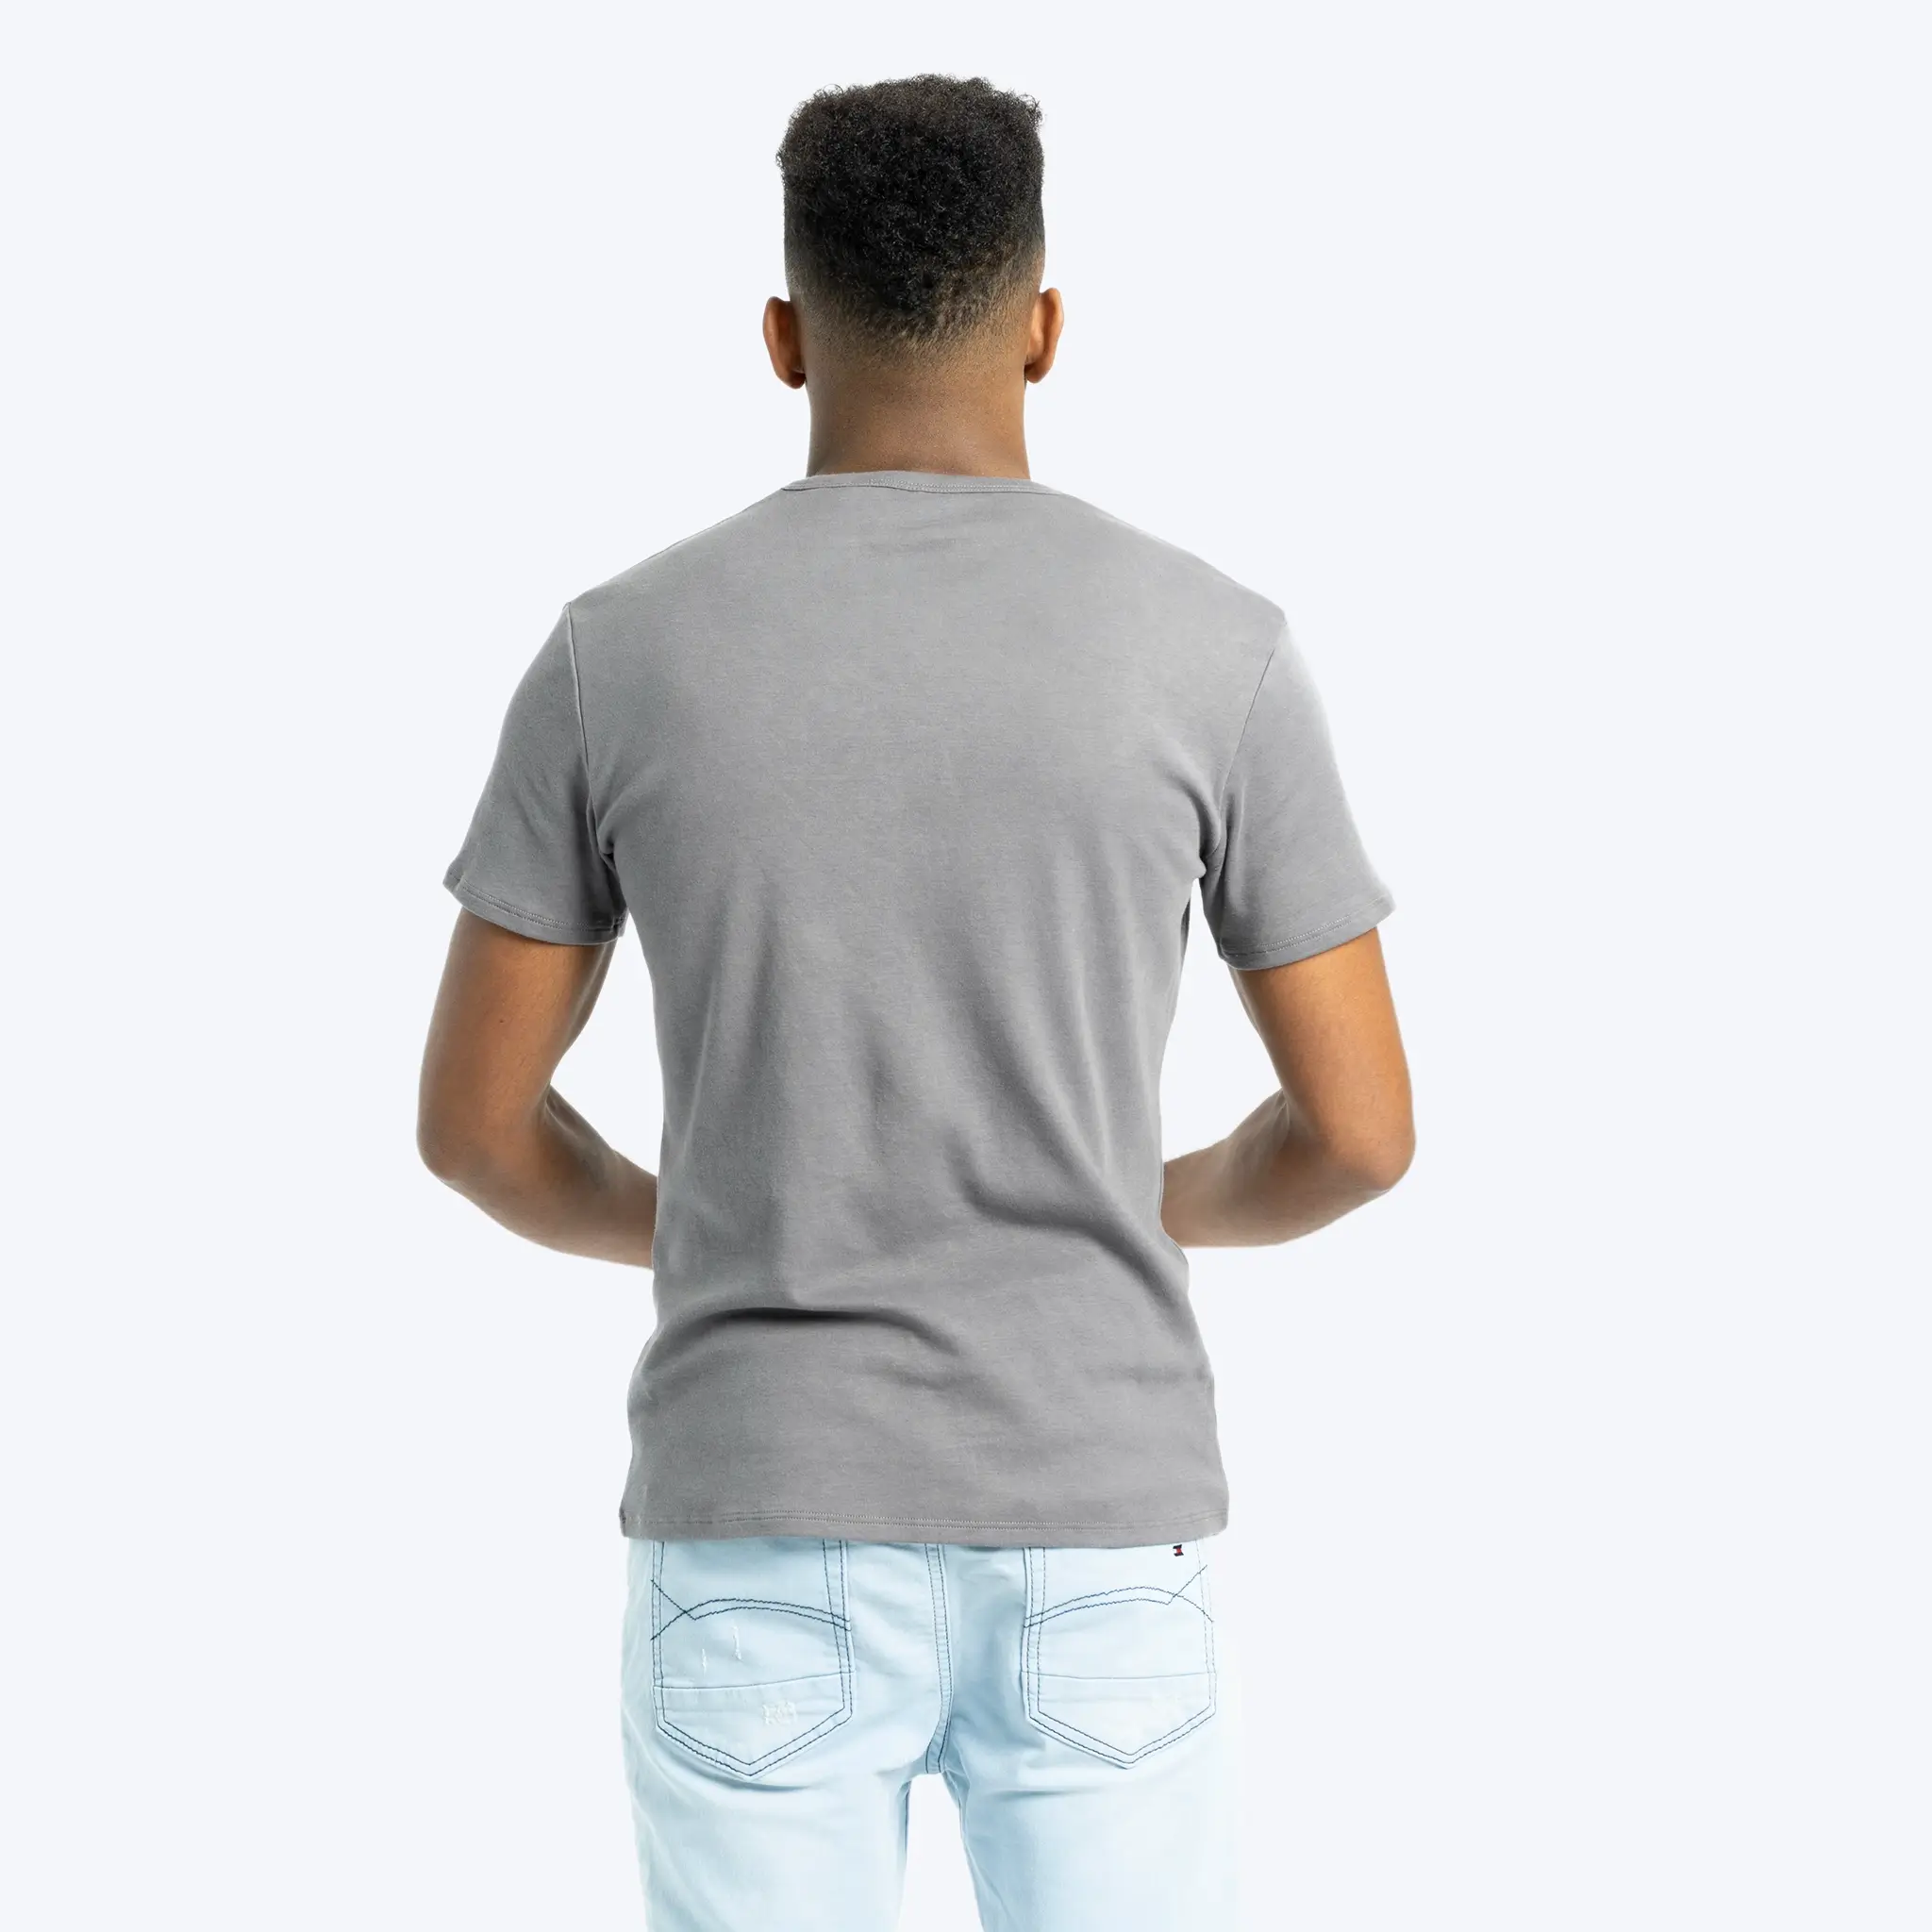 mens sustainable clothing tshirt vneck color natural gray